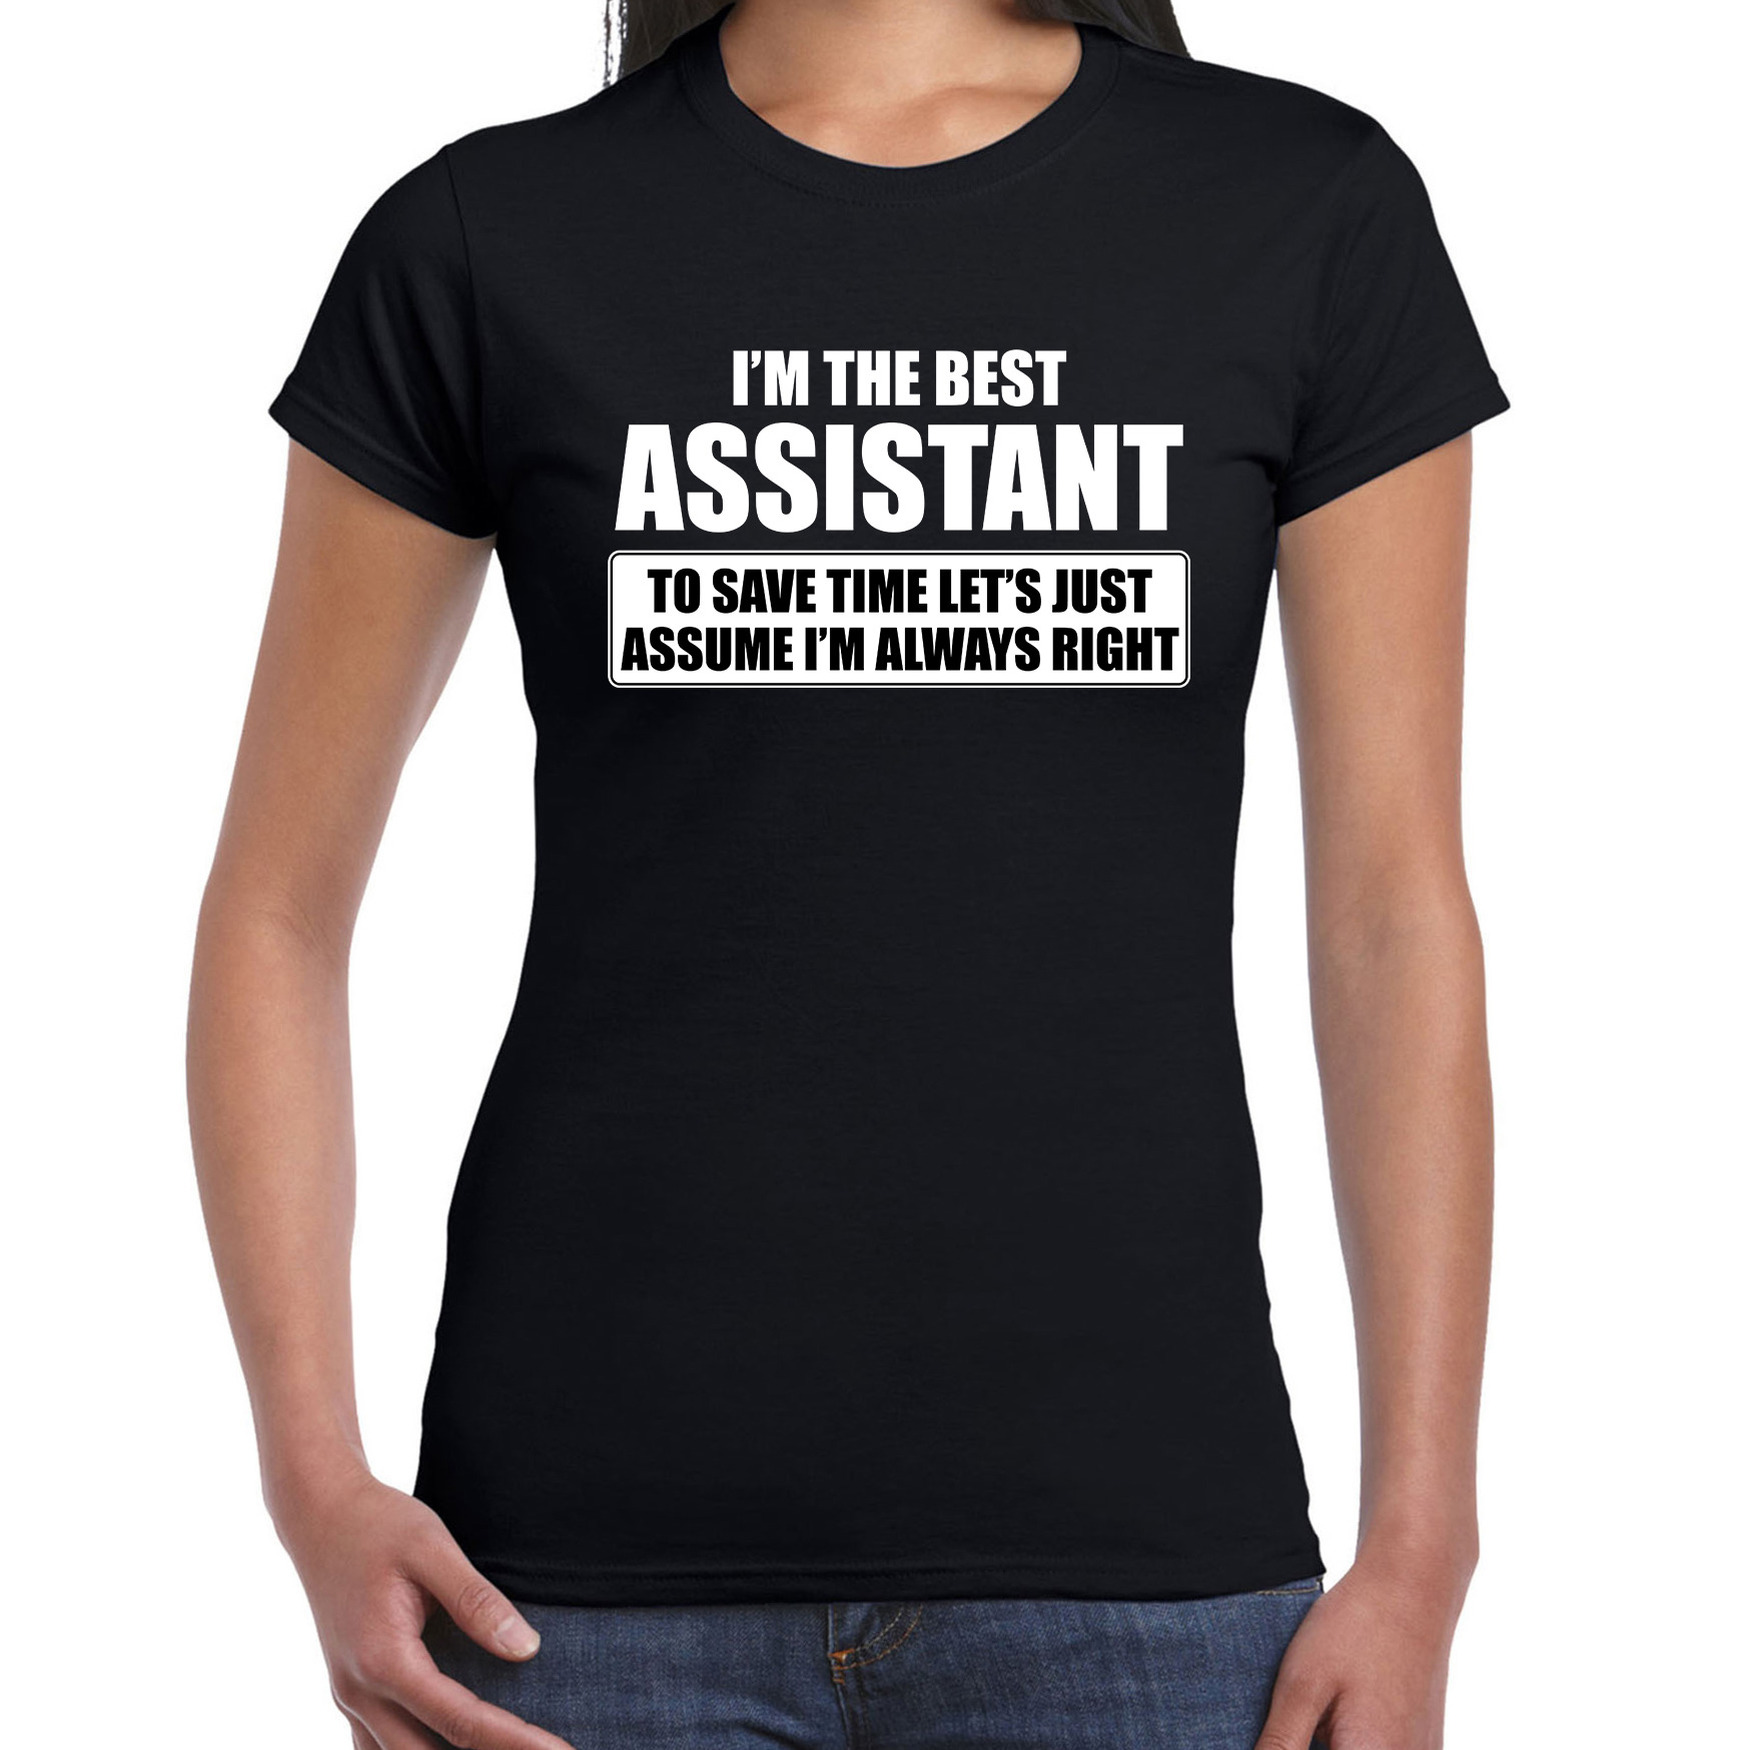 I'm the best assistant t-shirt zwart dames De beste assistent cadeau